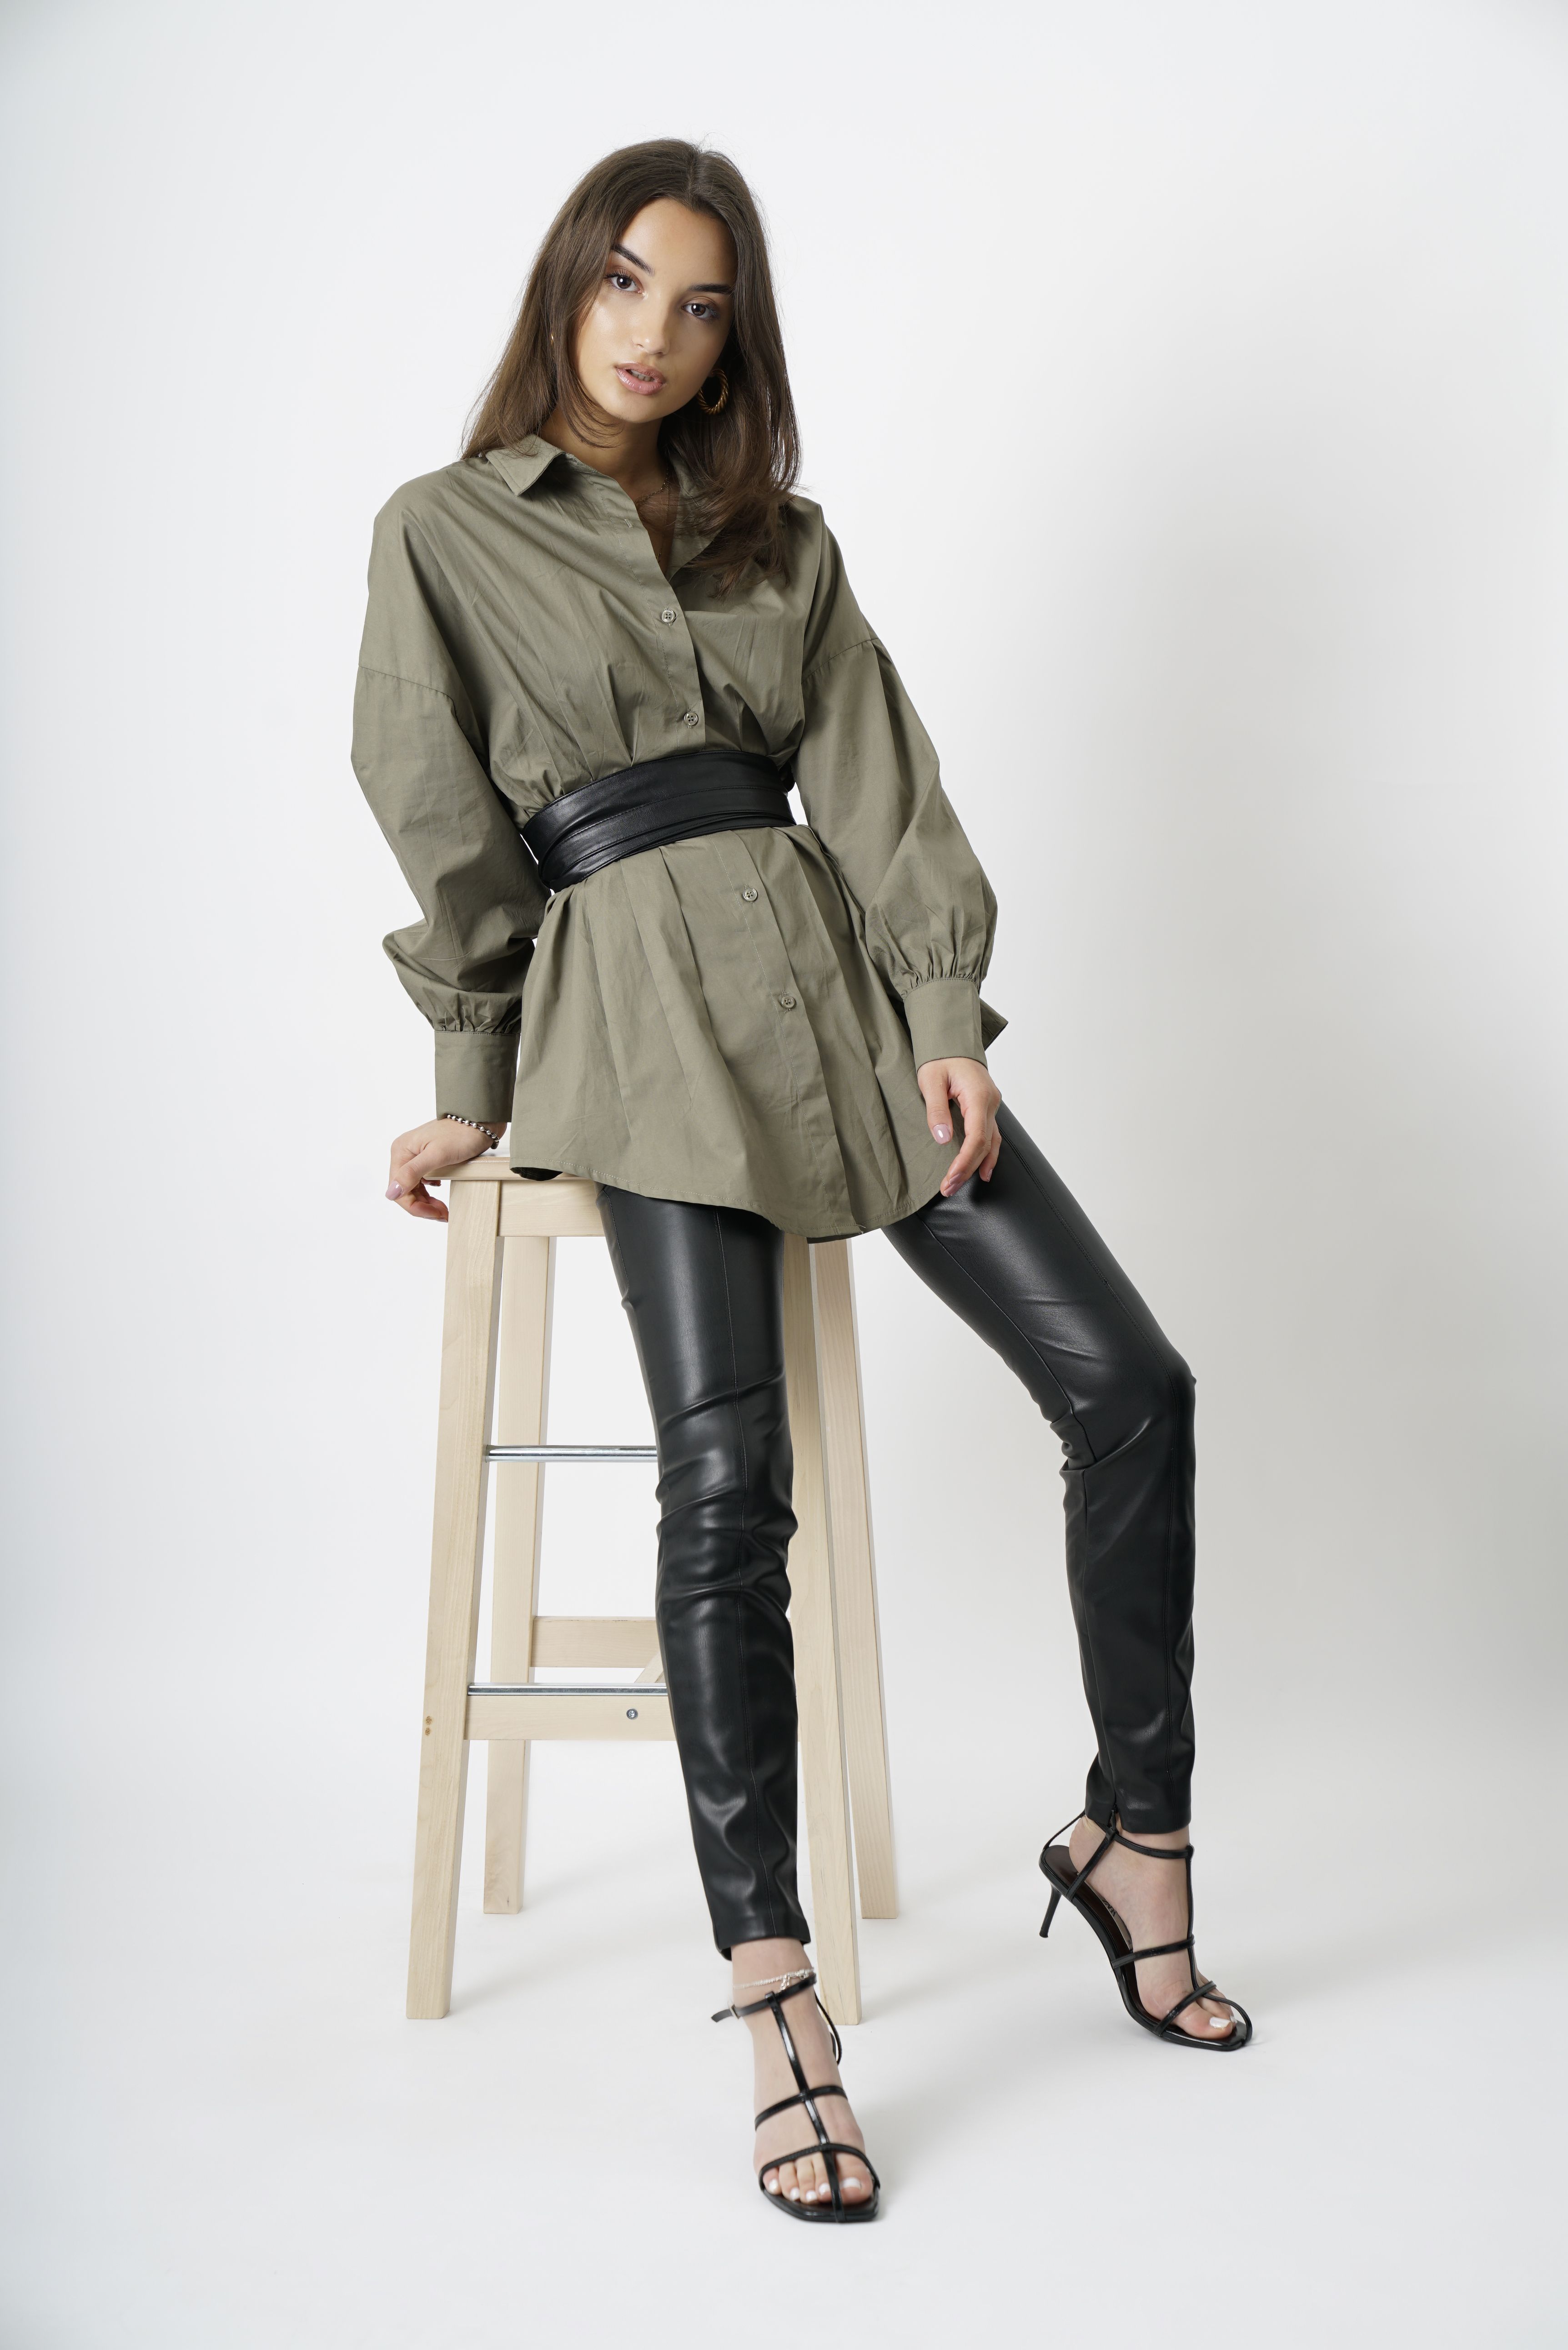 Jessica Andrada Ghenta Profile | YUMM - Your Model Management